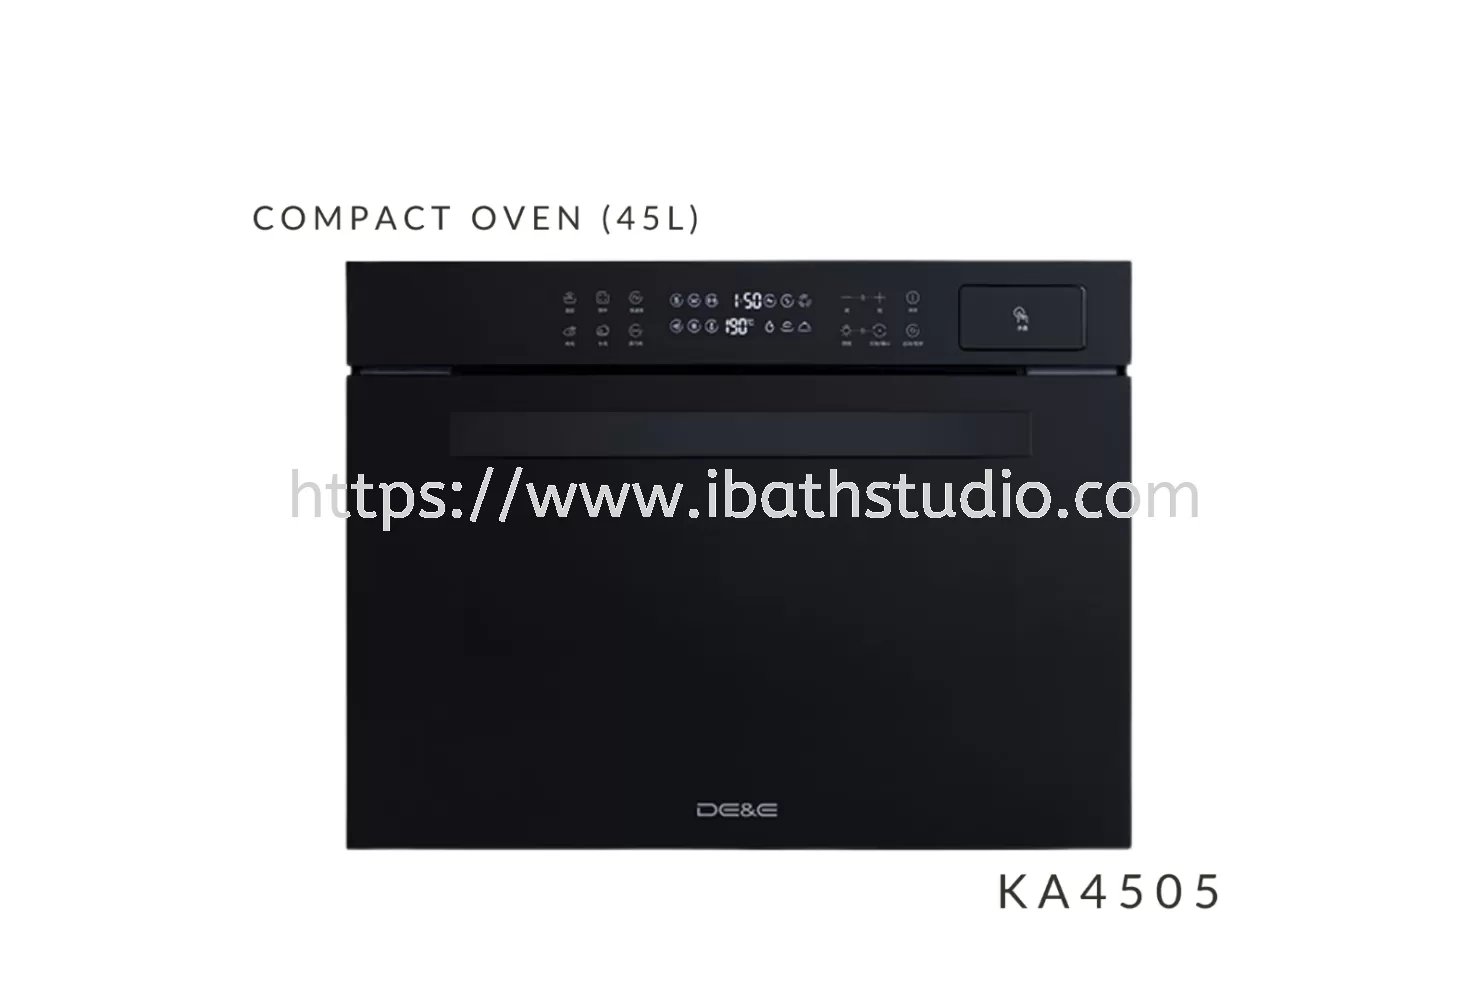 DE&E KA4505 45L Built-In Multifunction Compact Oven